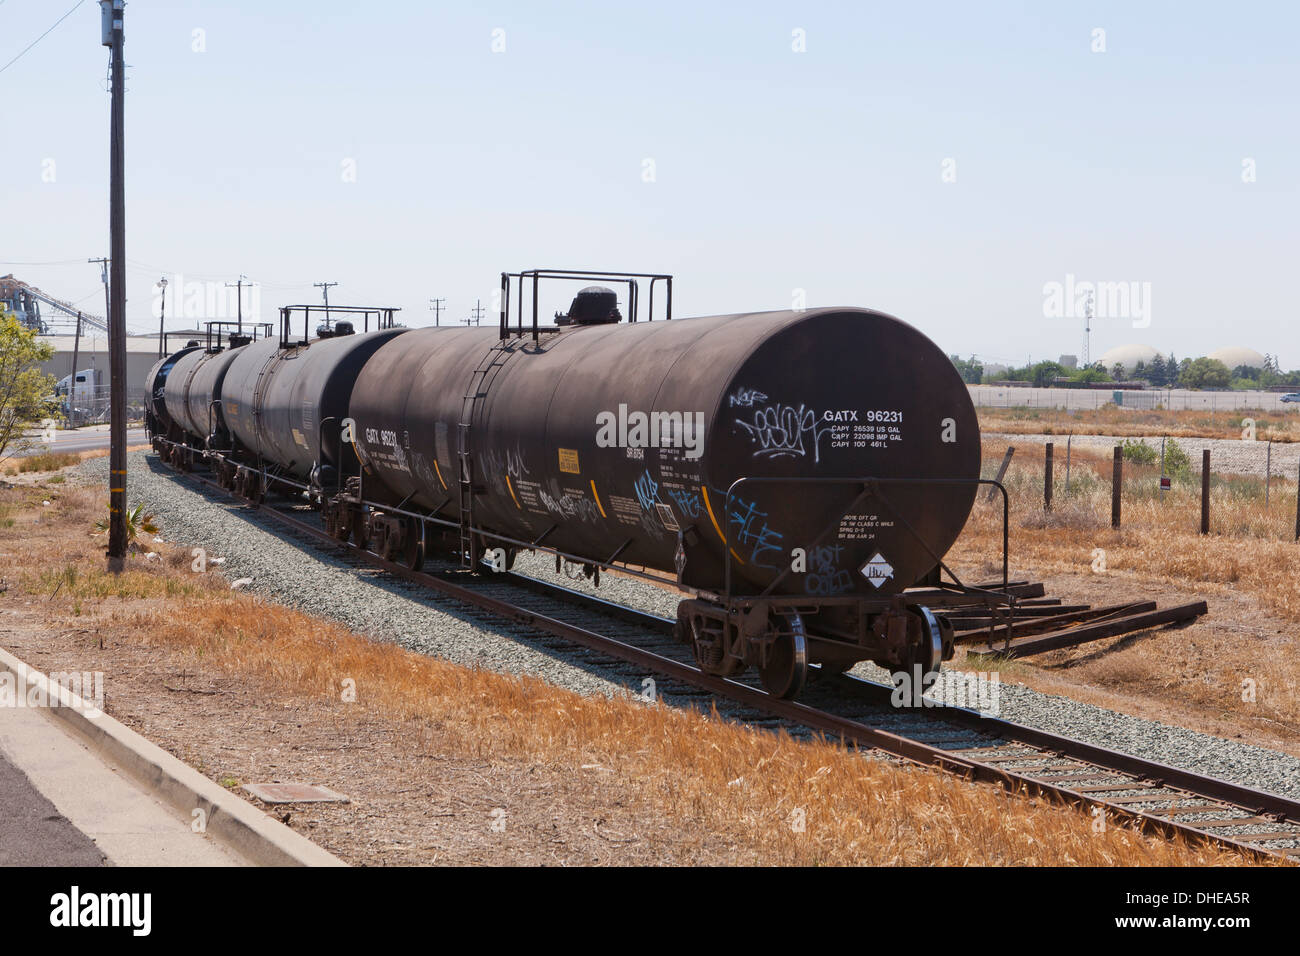 DOT 111 rail tank cars - California USA Stock Photo